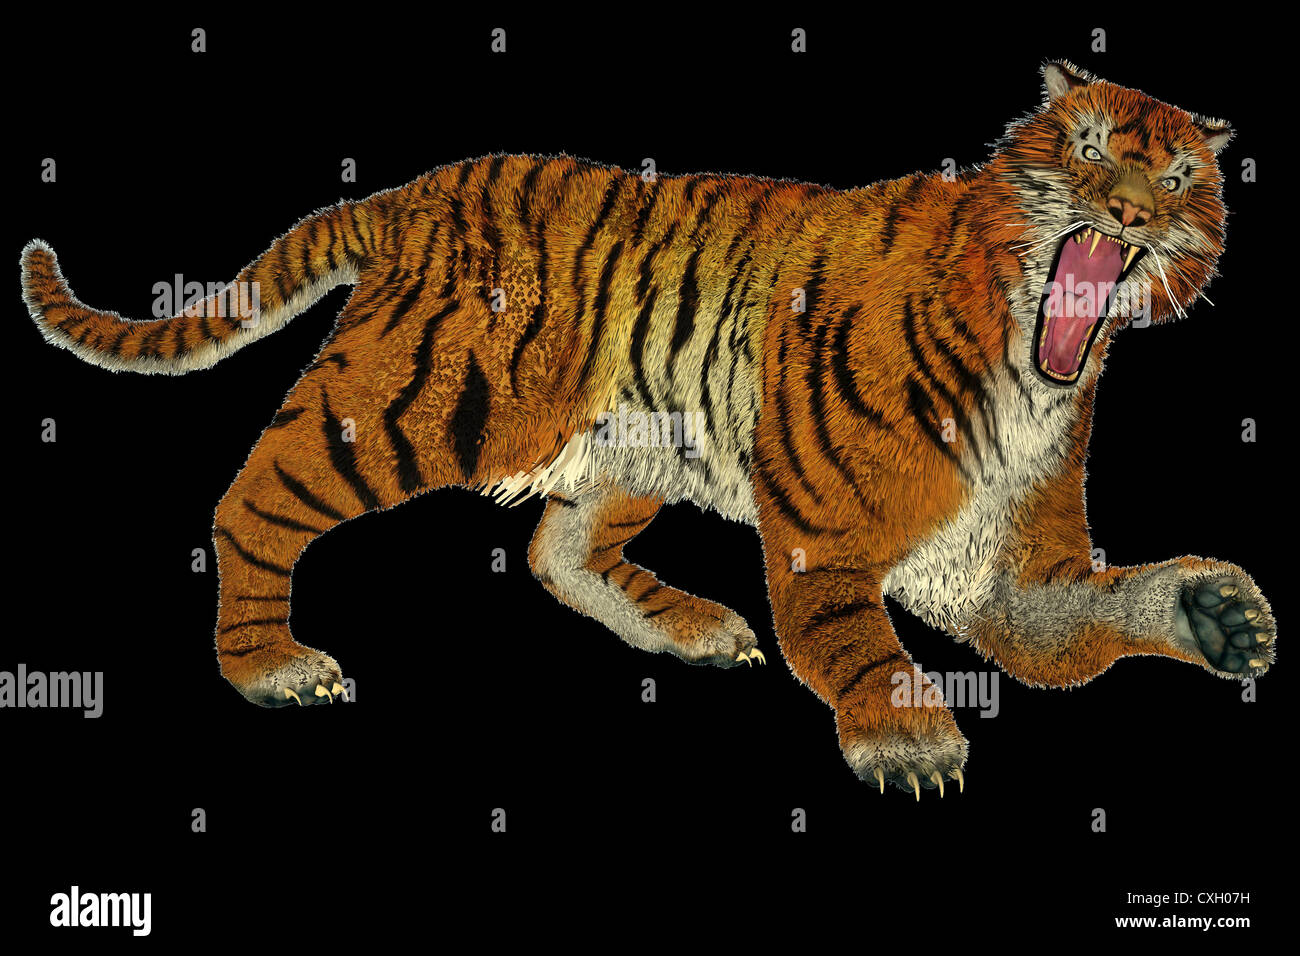 Big beautiful tiger raging in black background Stock Photo